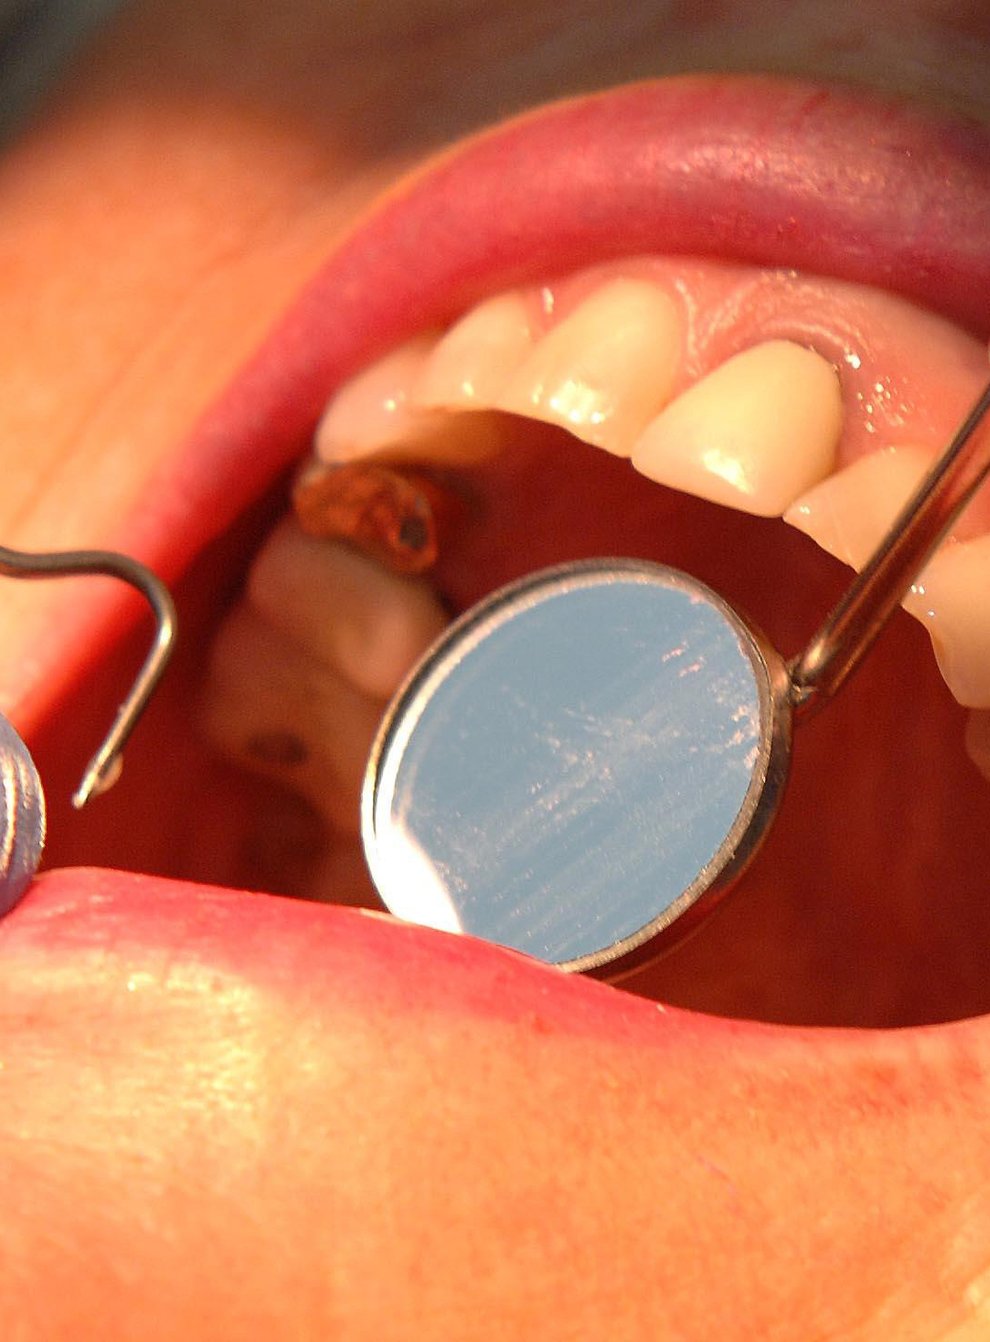 A dentist examining a mouth